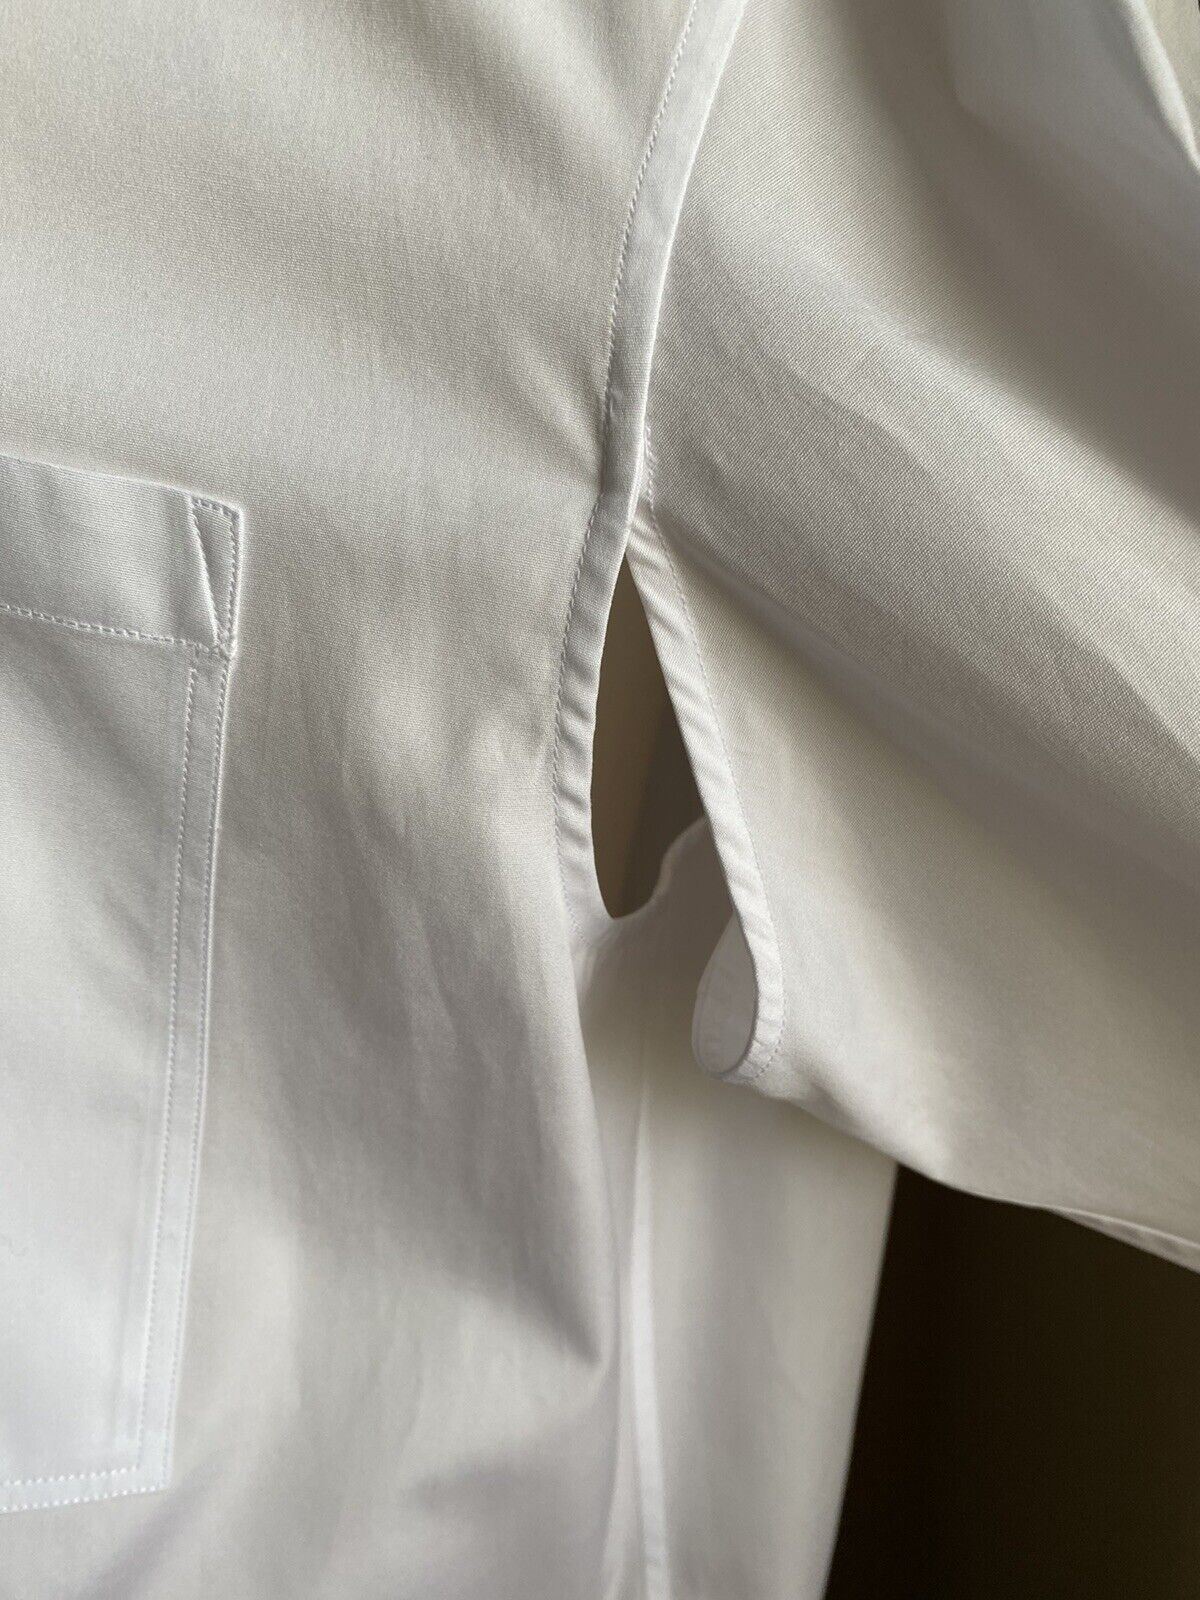 New $1195 Valentino Men’s Oversized unique Shirt White Size 39/15.5 Italy